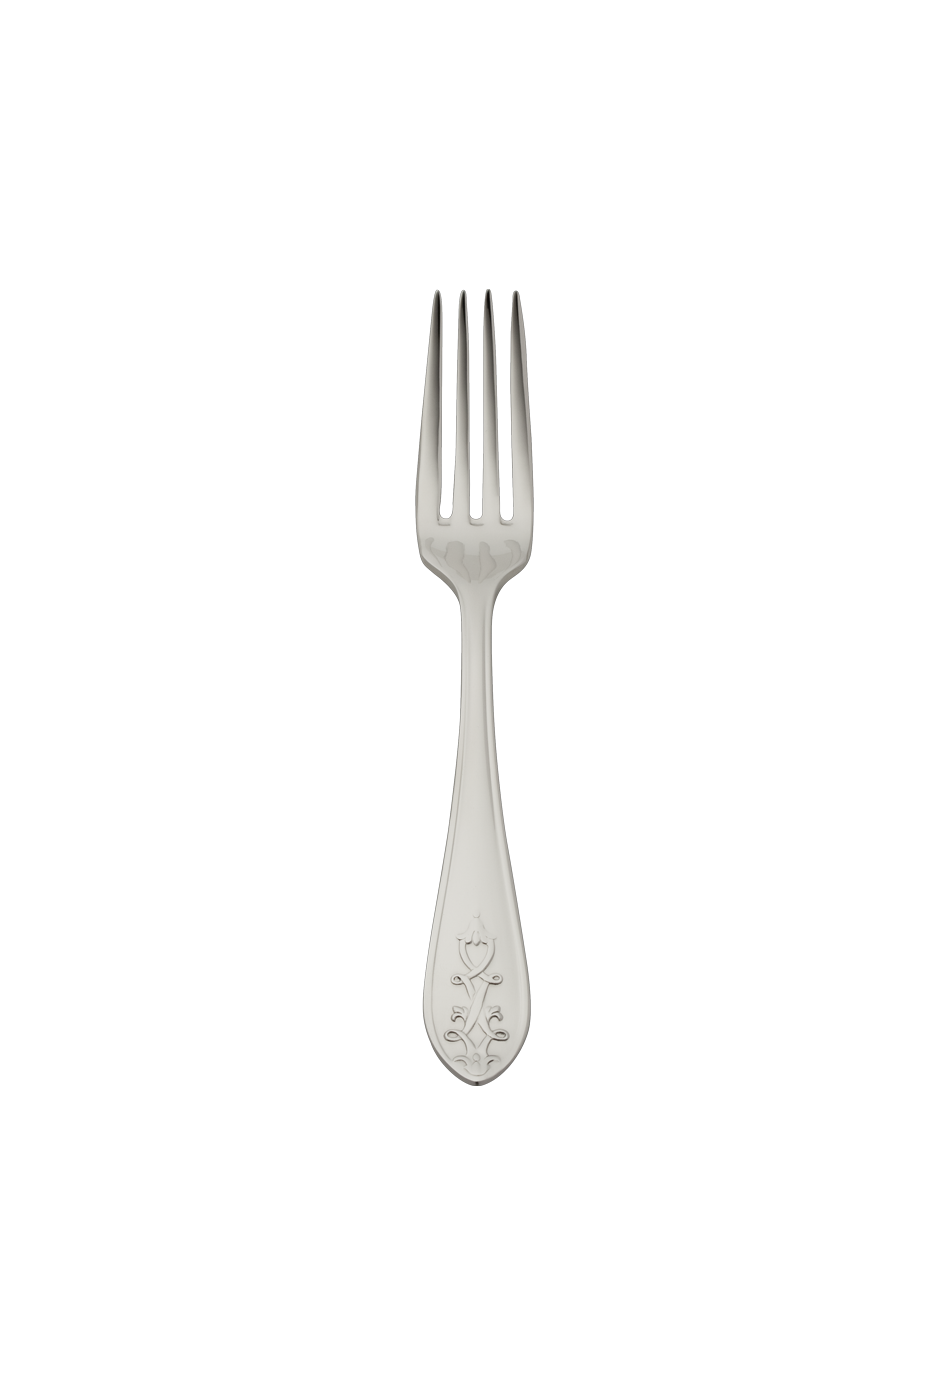 Jardin Dessert Fork (18/8 stainless steel)